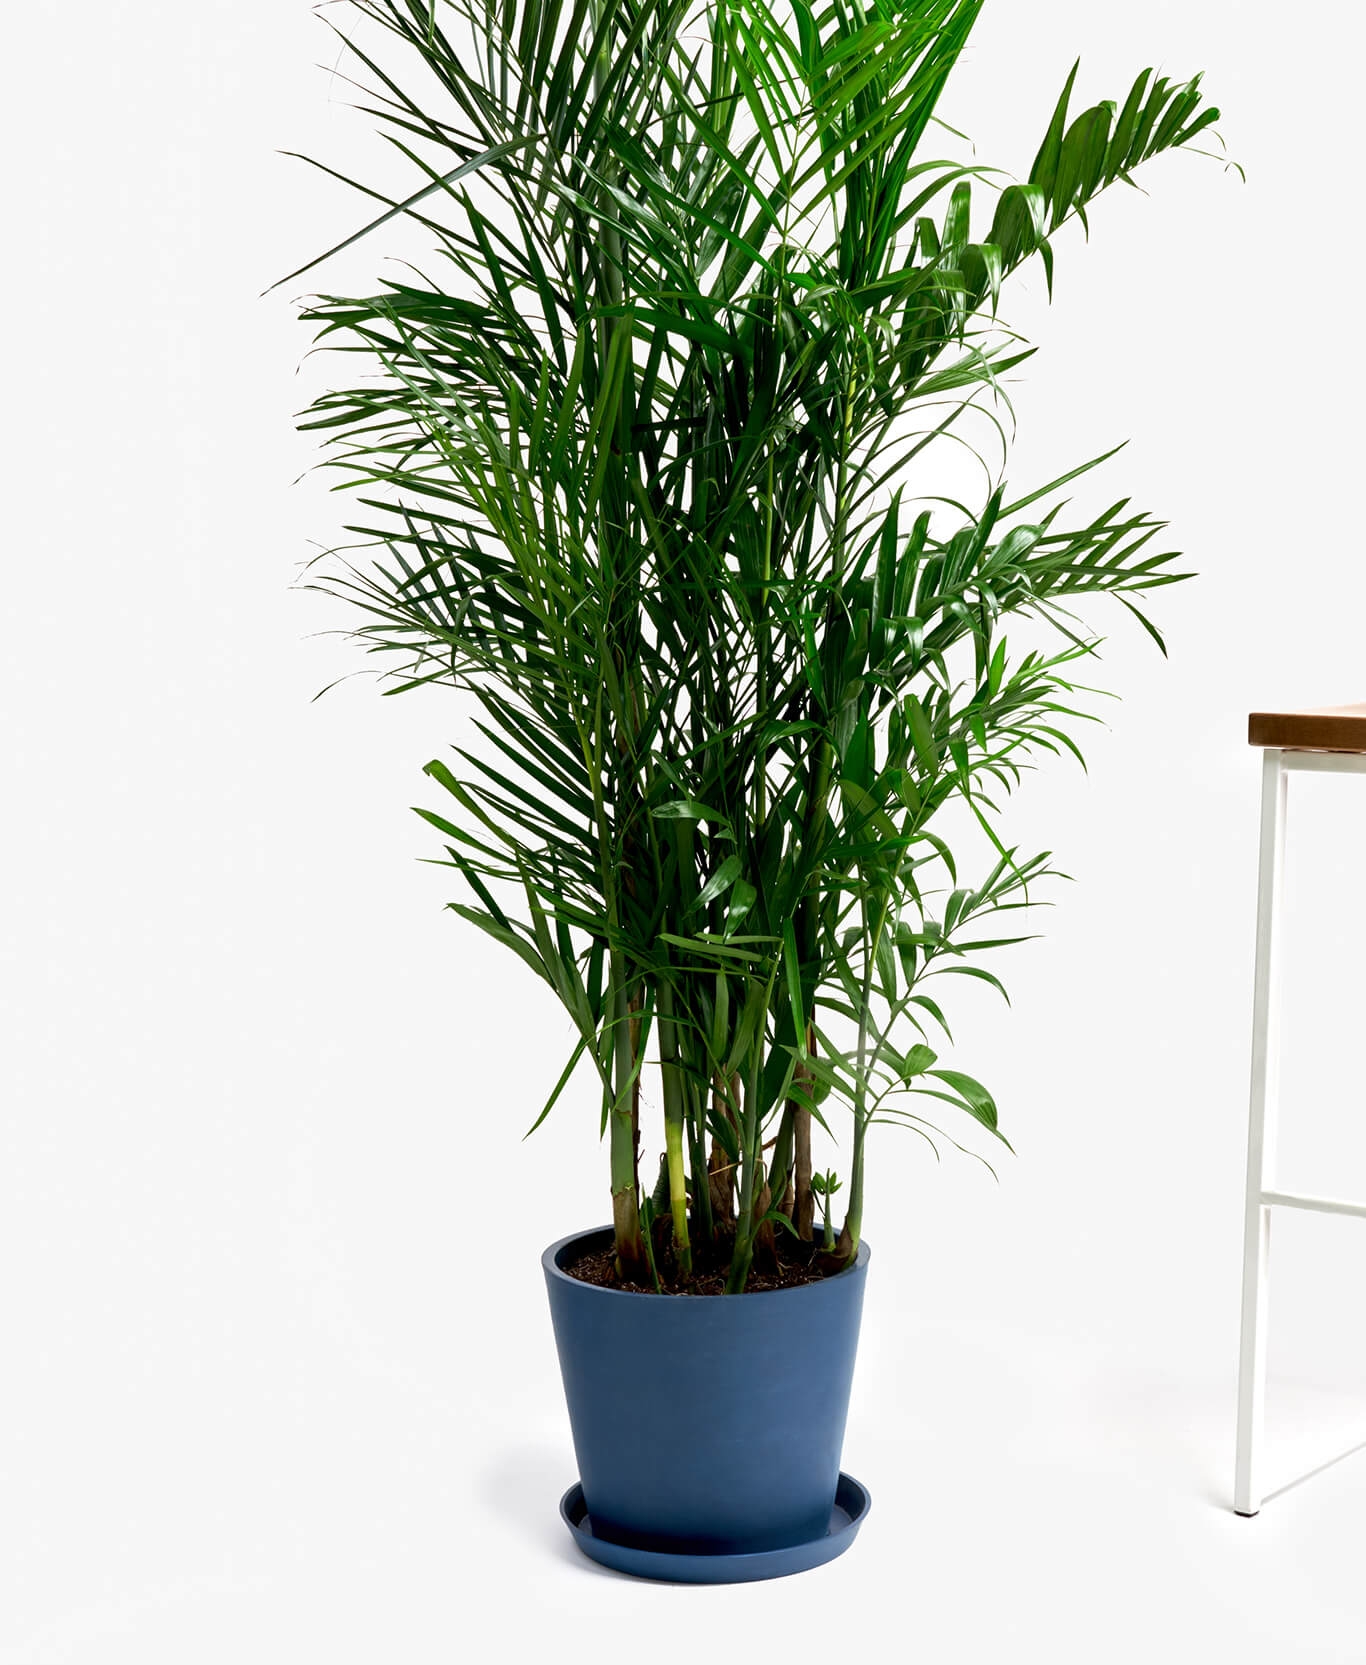 Bamboo Palm, Indigo Pot - Image 0